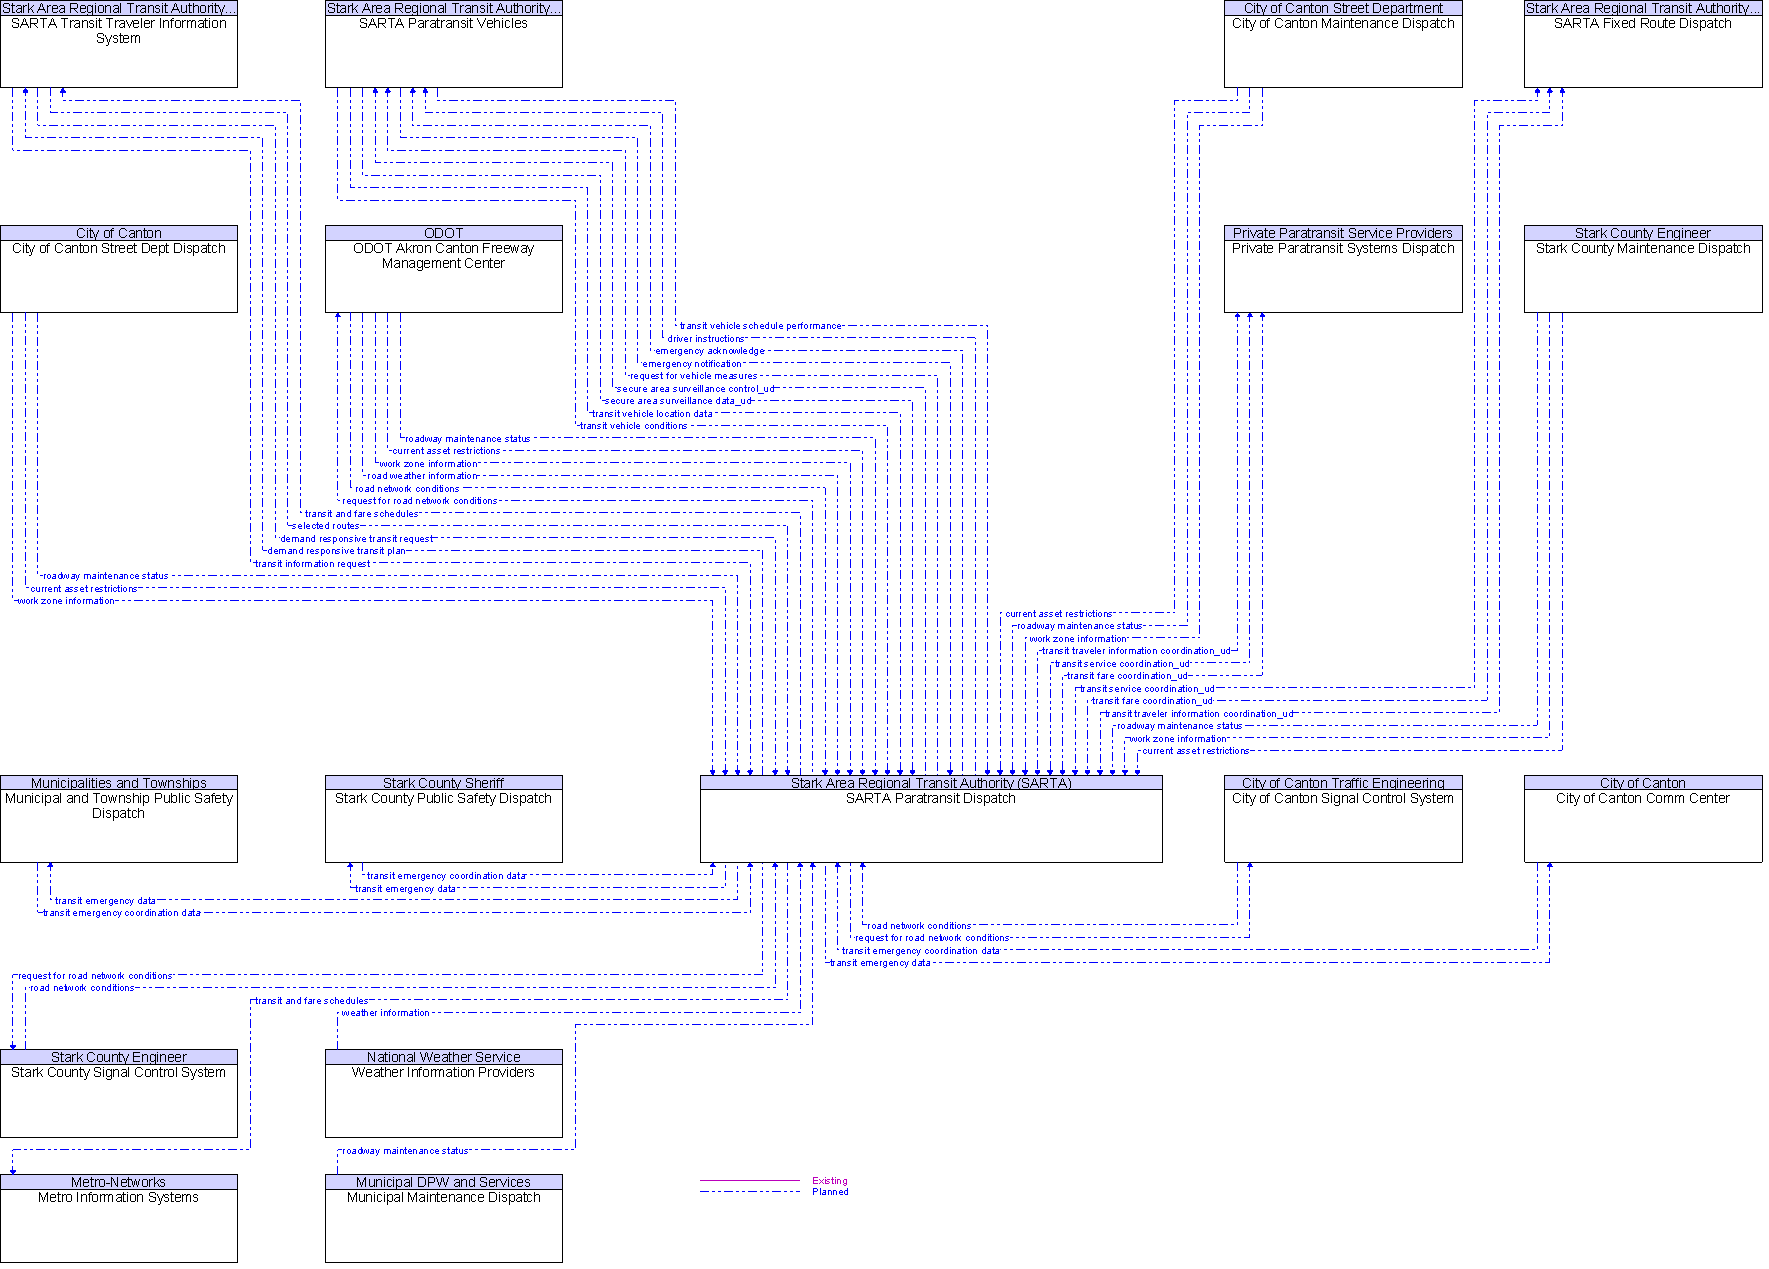 Context Diagram for SARTA Paratransit Dispatch